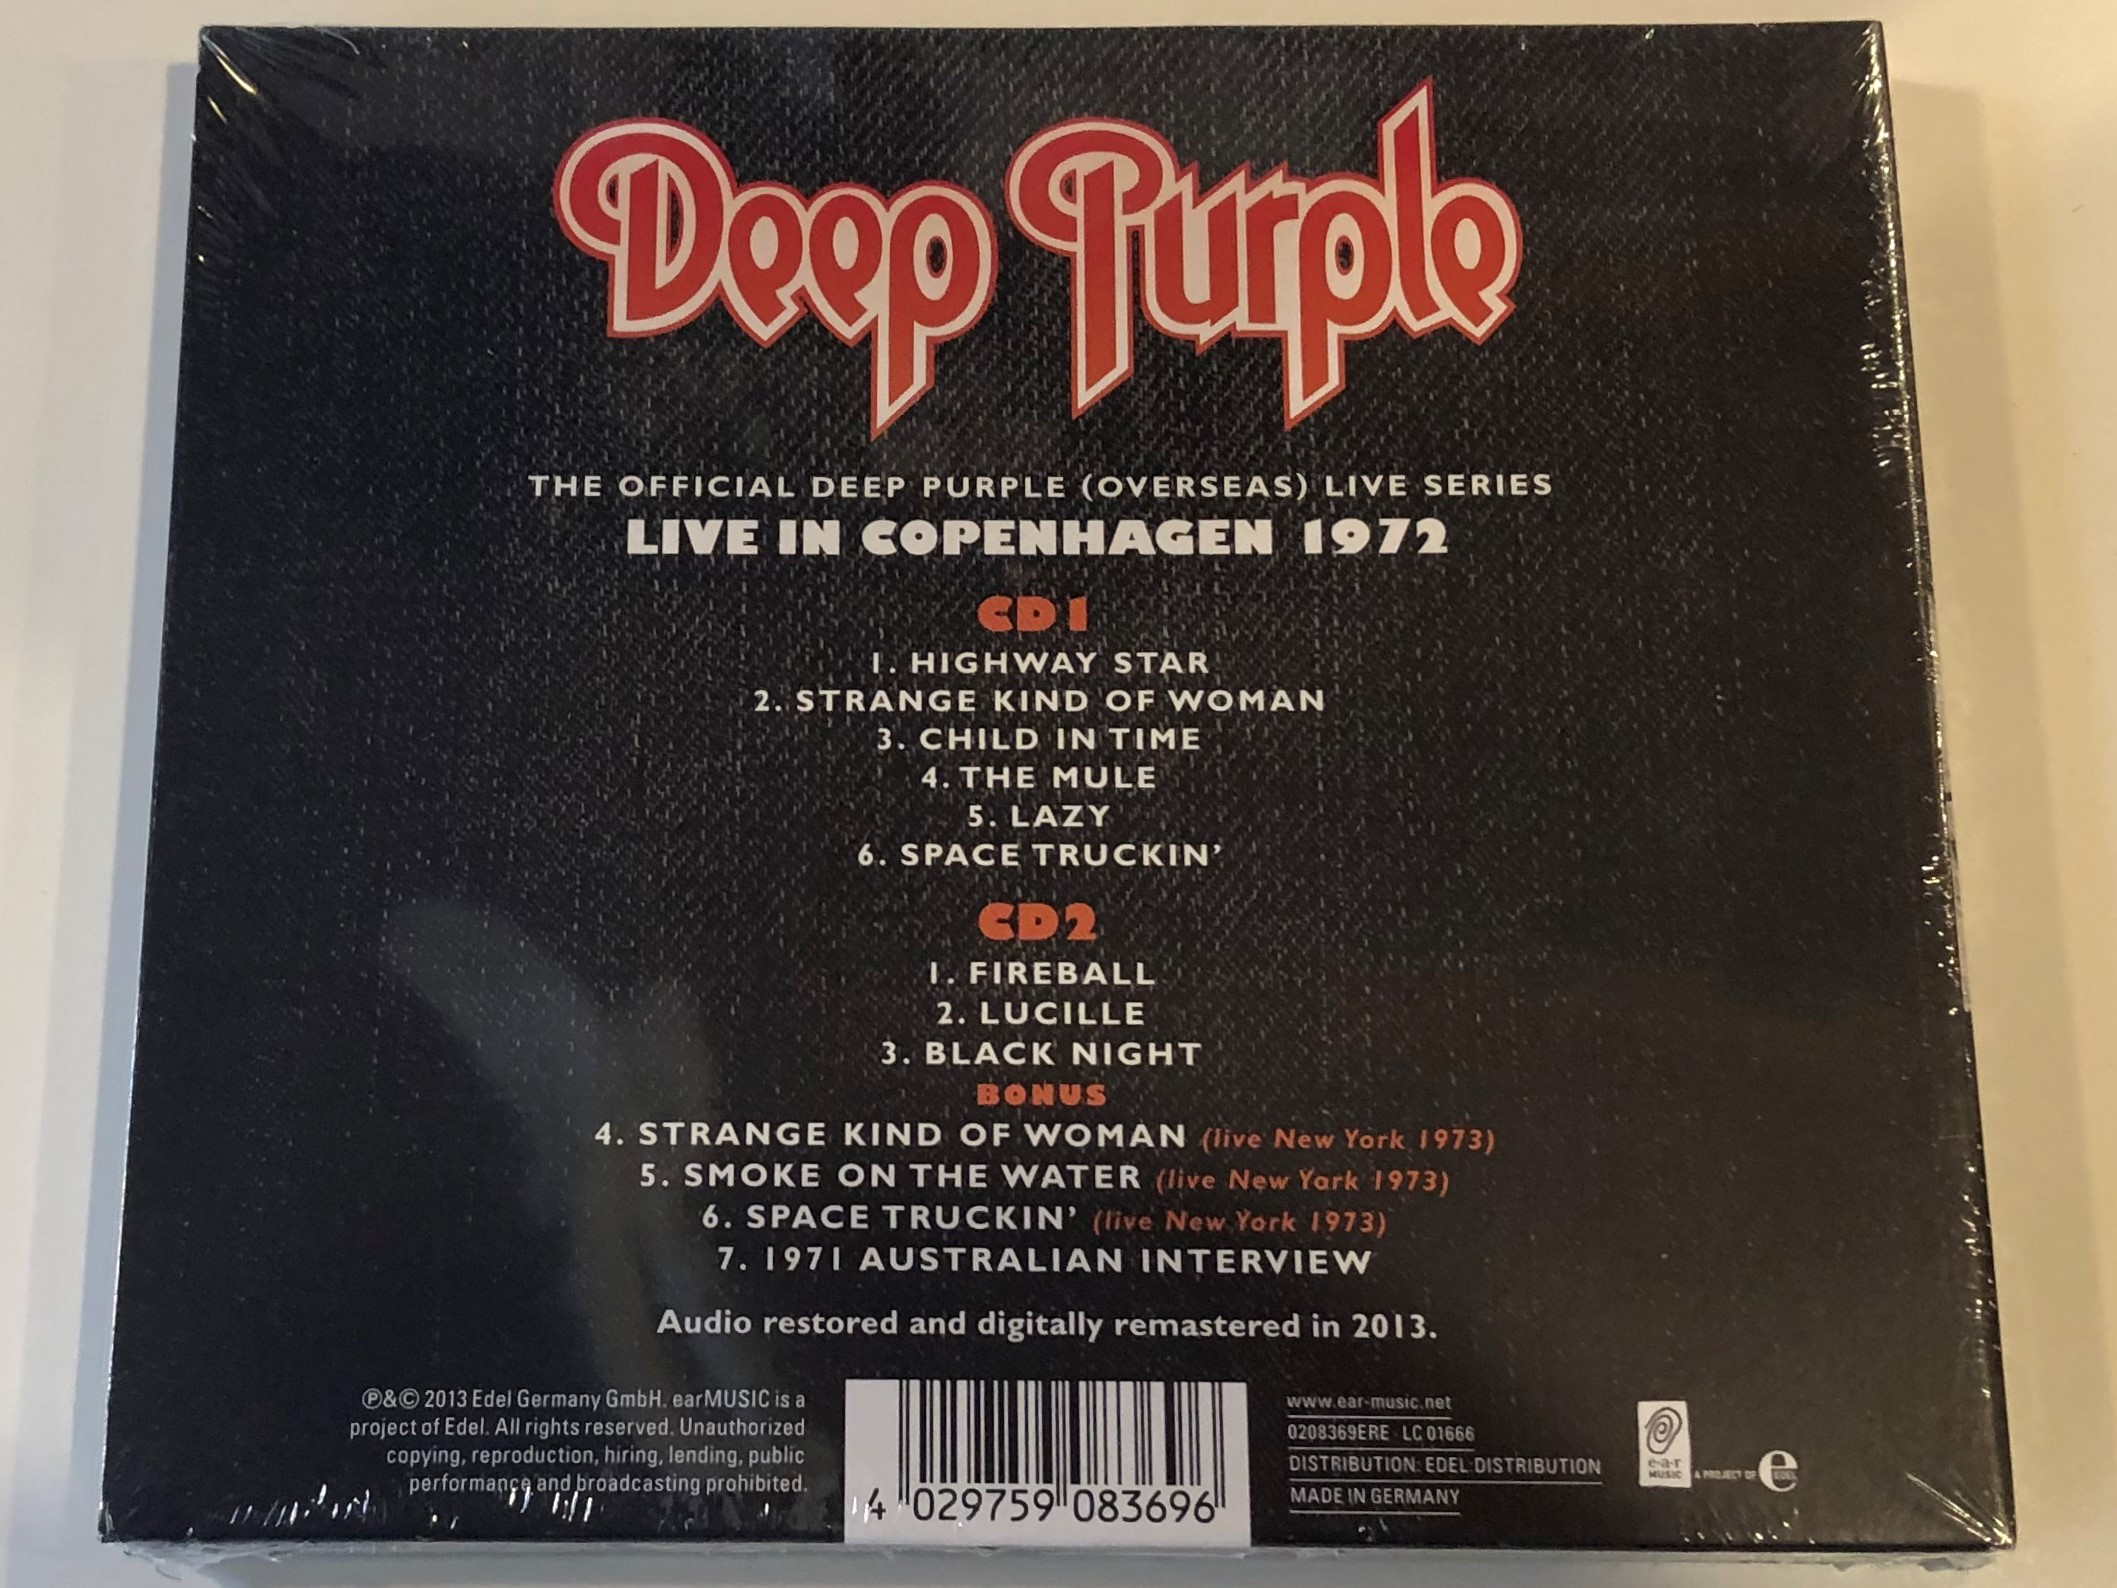 the-offical-deep-purple-overseas-live-series-copenhagen-1972-blackmore-gillan-glover-lord-paice-deep-purple-ear-music-audio-cd-2013-0208369ere-2-.jpg